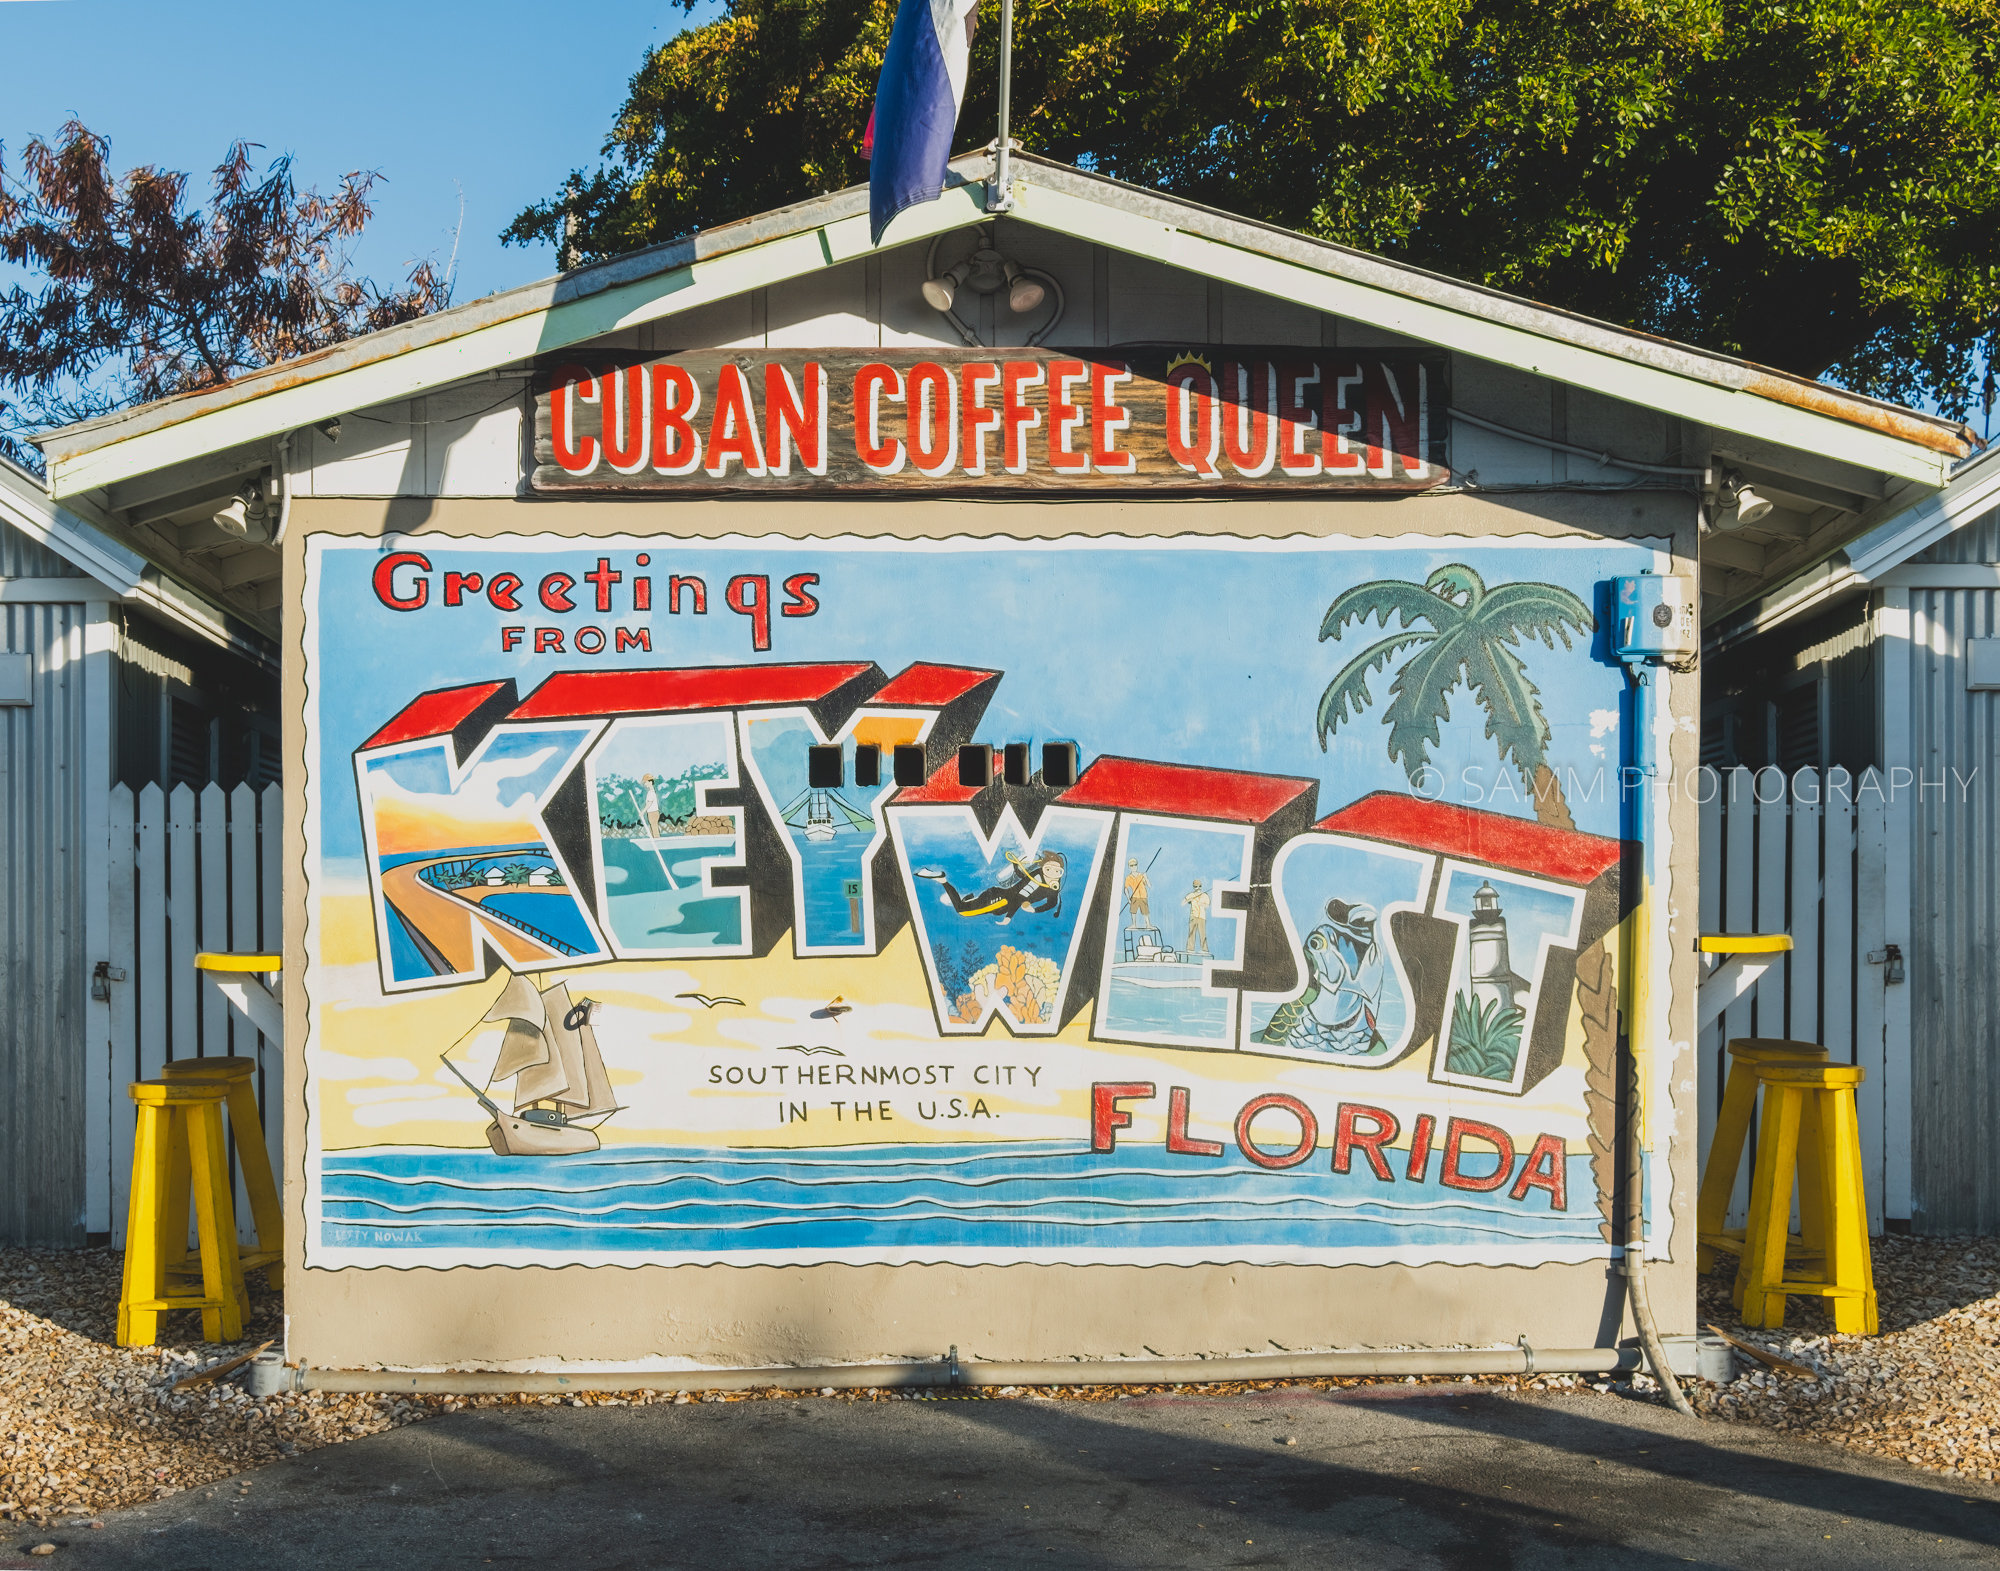 3 Best Items on the Cuban Coffee Queen Key West Menu - Fun in Key West